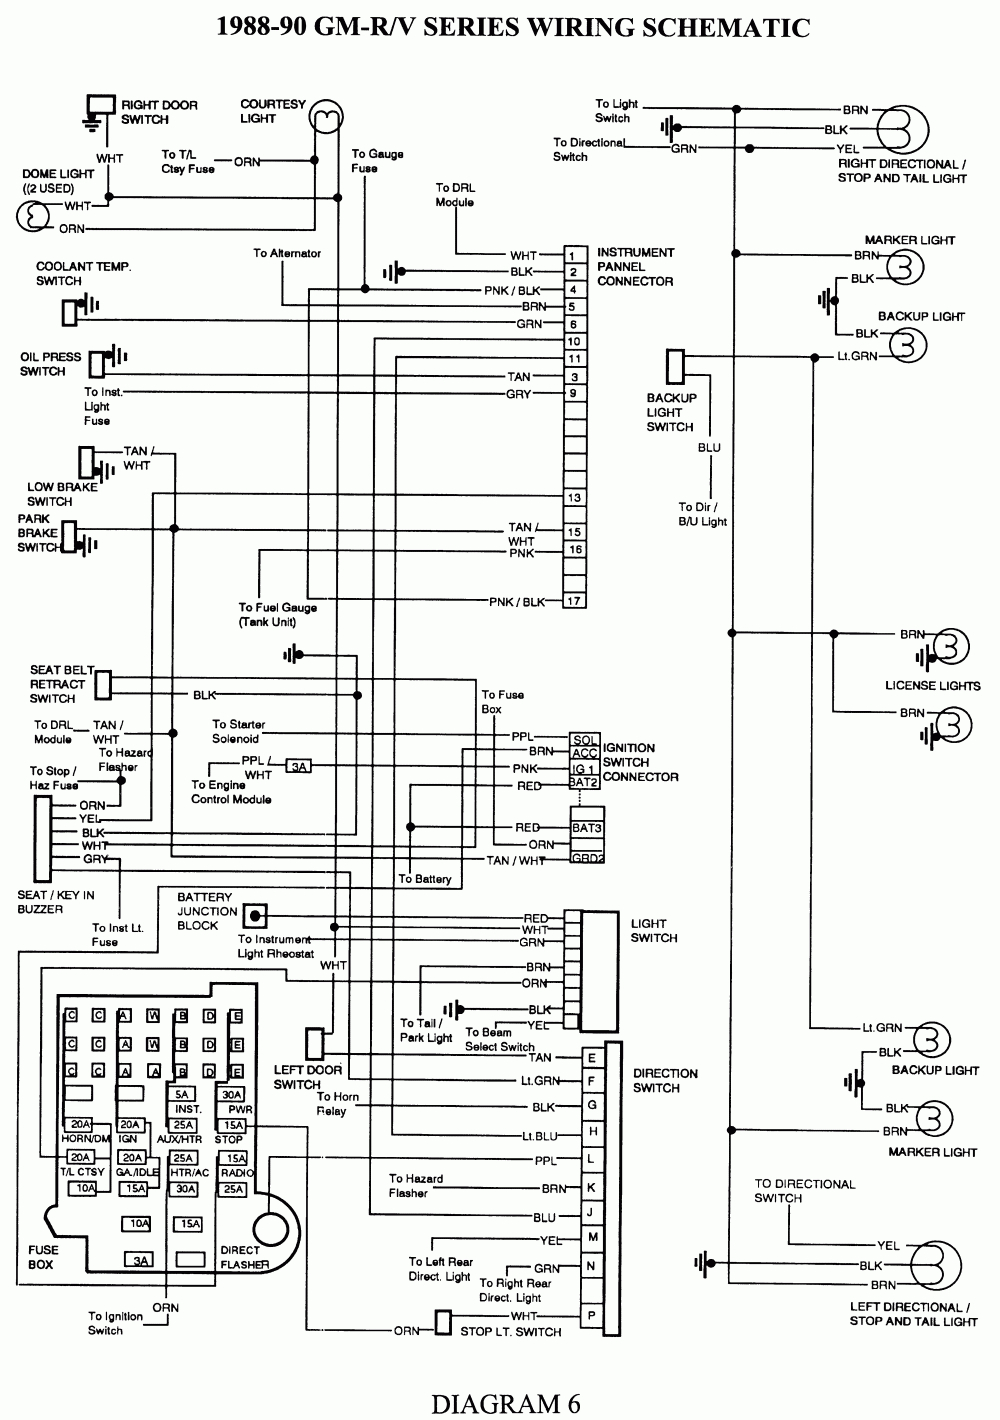 Repair Guides | Wiring Diagrams | Wiring Diagrams | Autozone - 1989 Chevy Truck Wiring Diagram